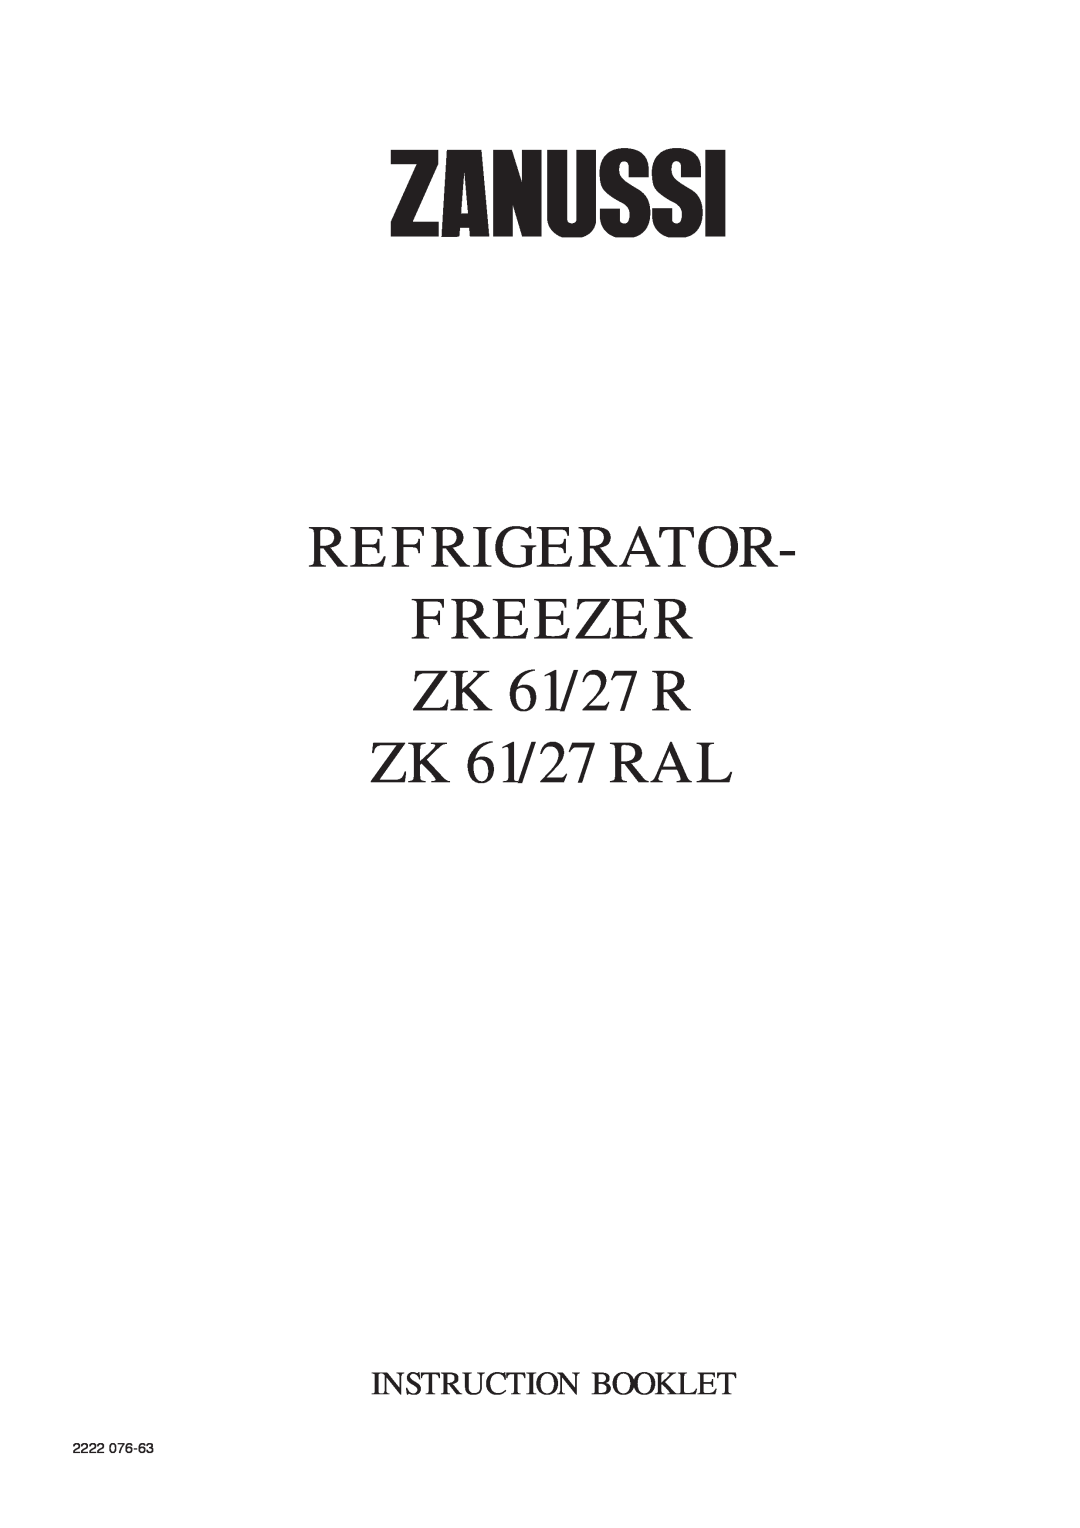 Zanussi manual REFRIGERATOR FREEZER ZK 61/27 R ZK 61/27 RAL, Instruction Booklet, 2222 